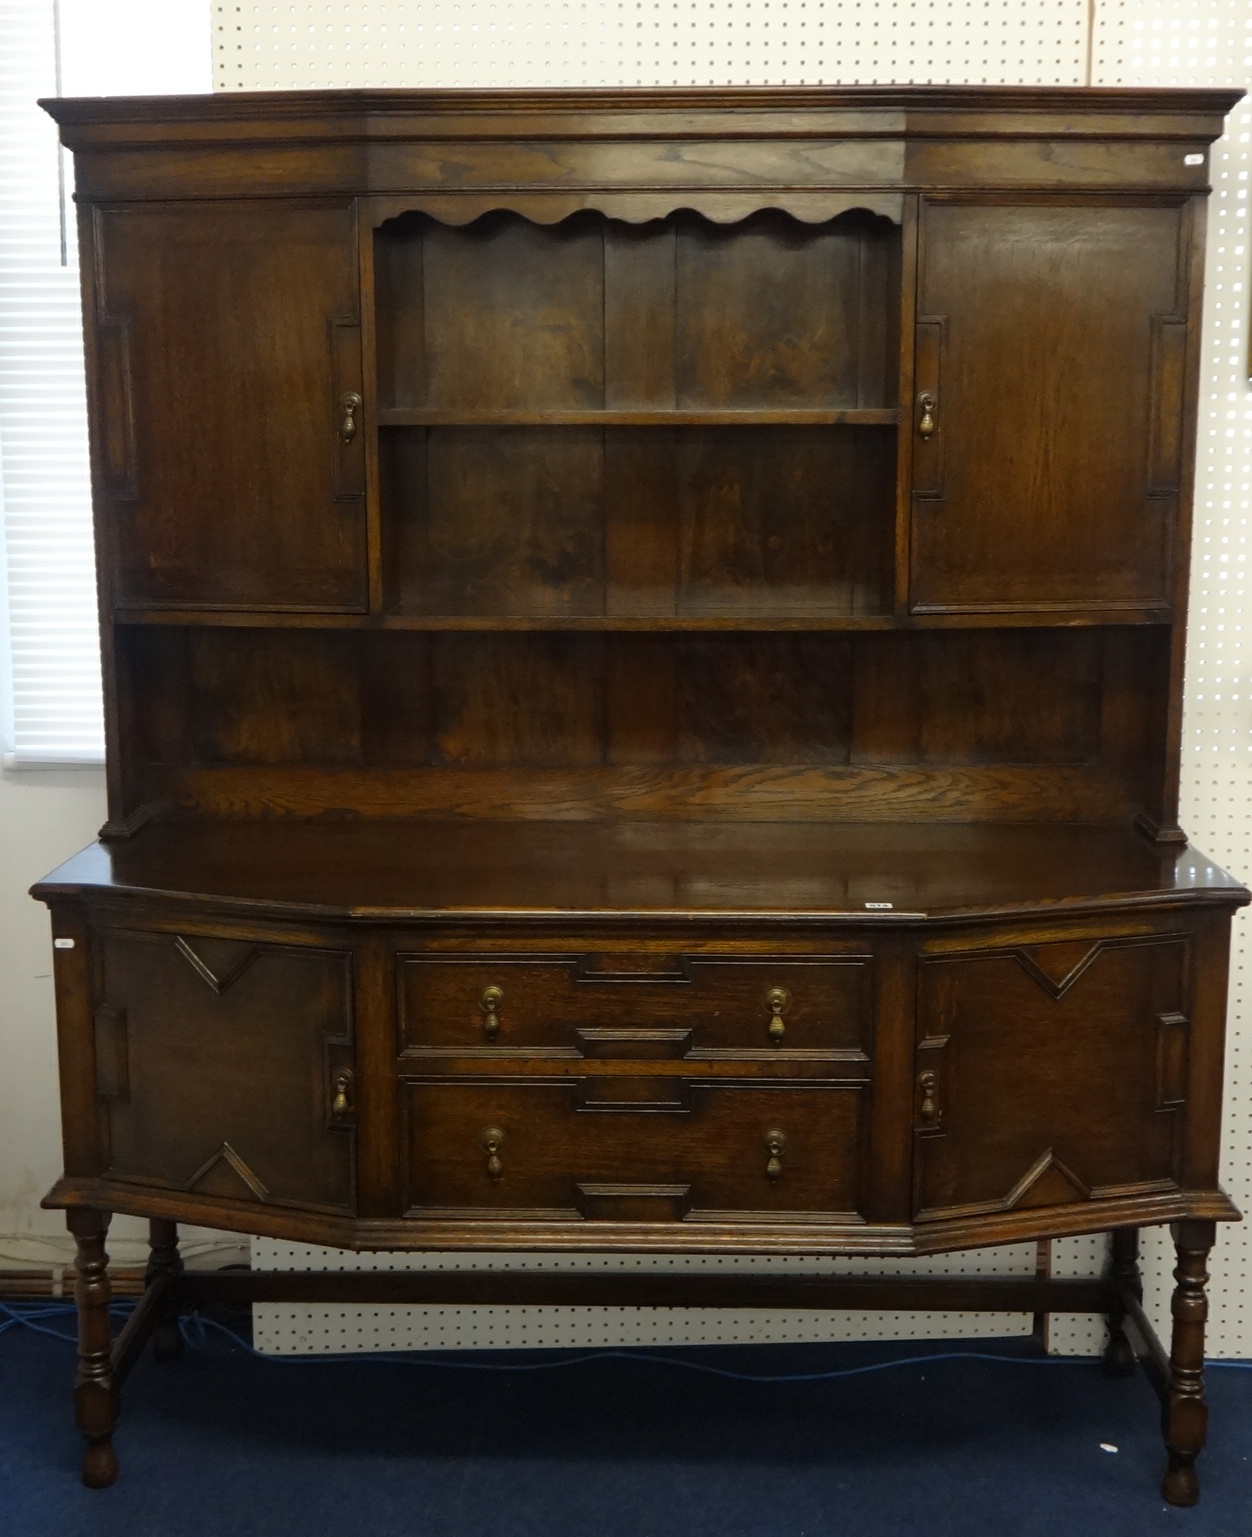 Reproduction Jacobean dresser in two parts 185cm x 145cm wide